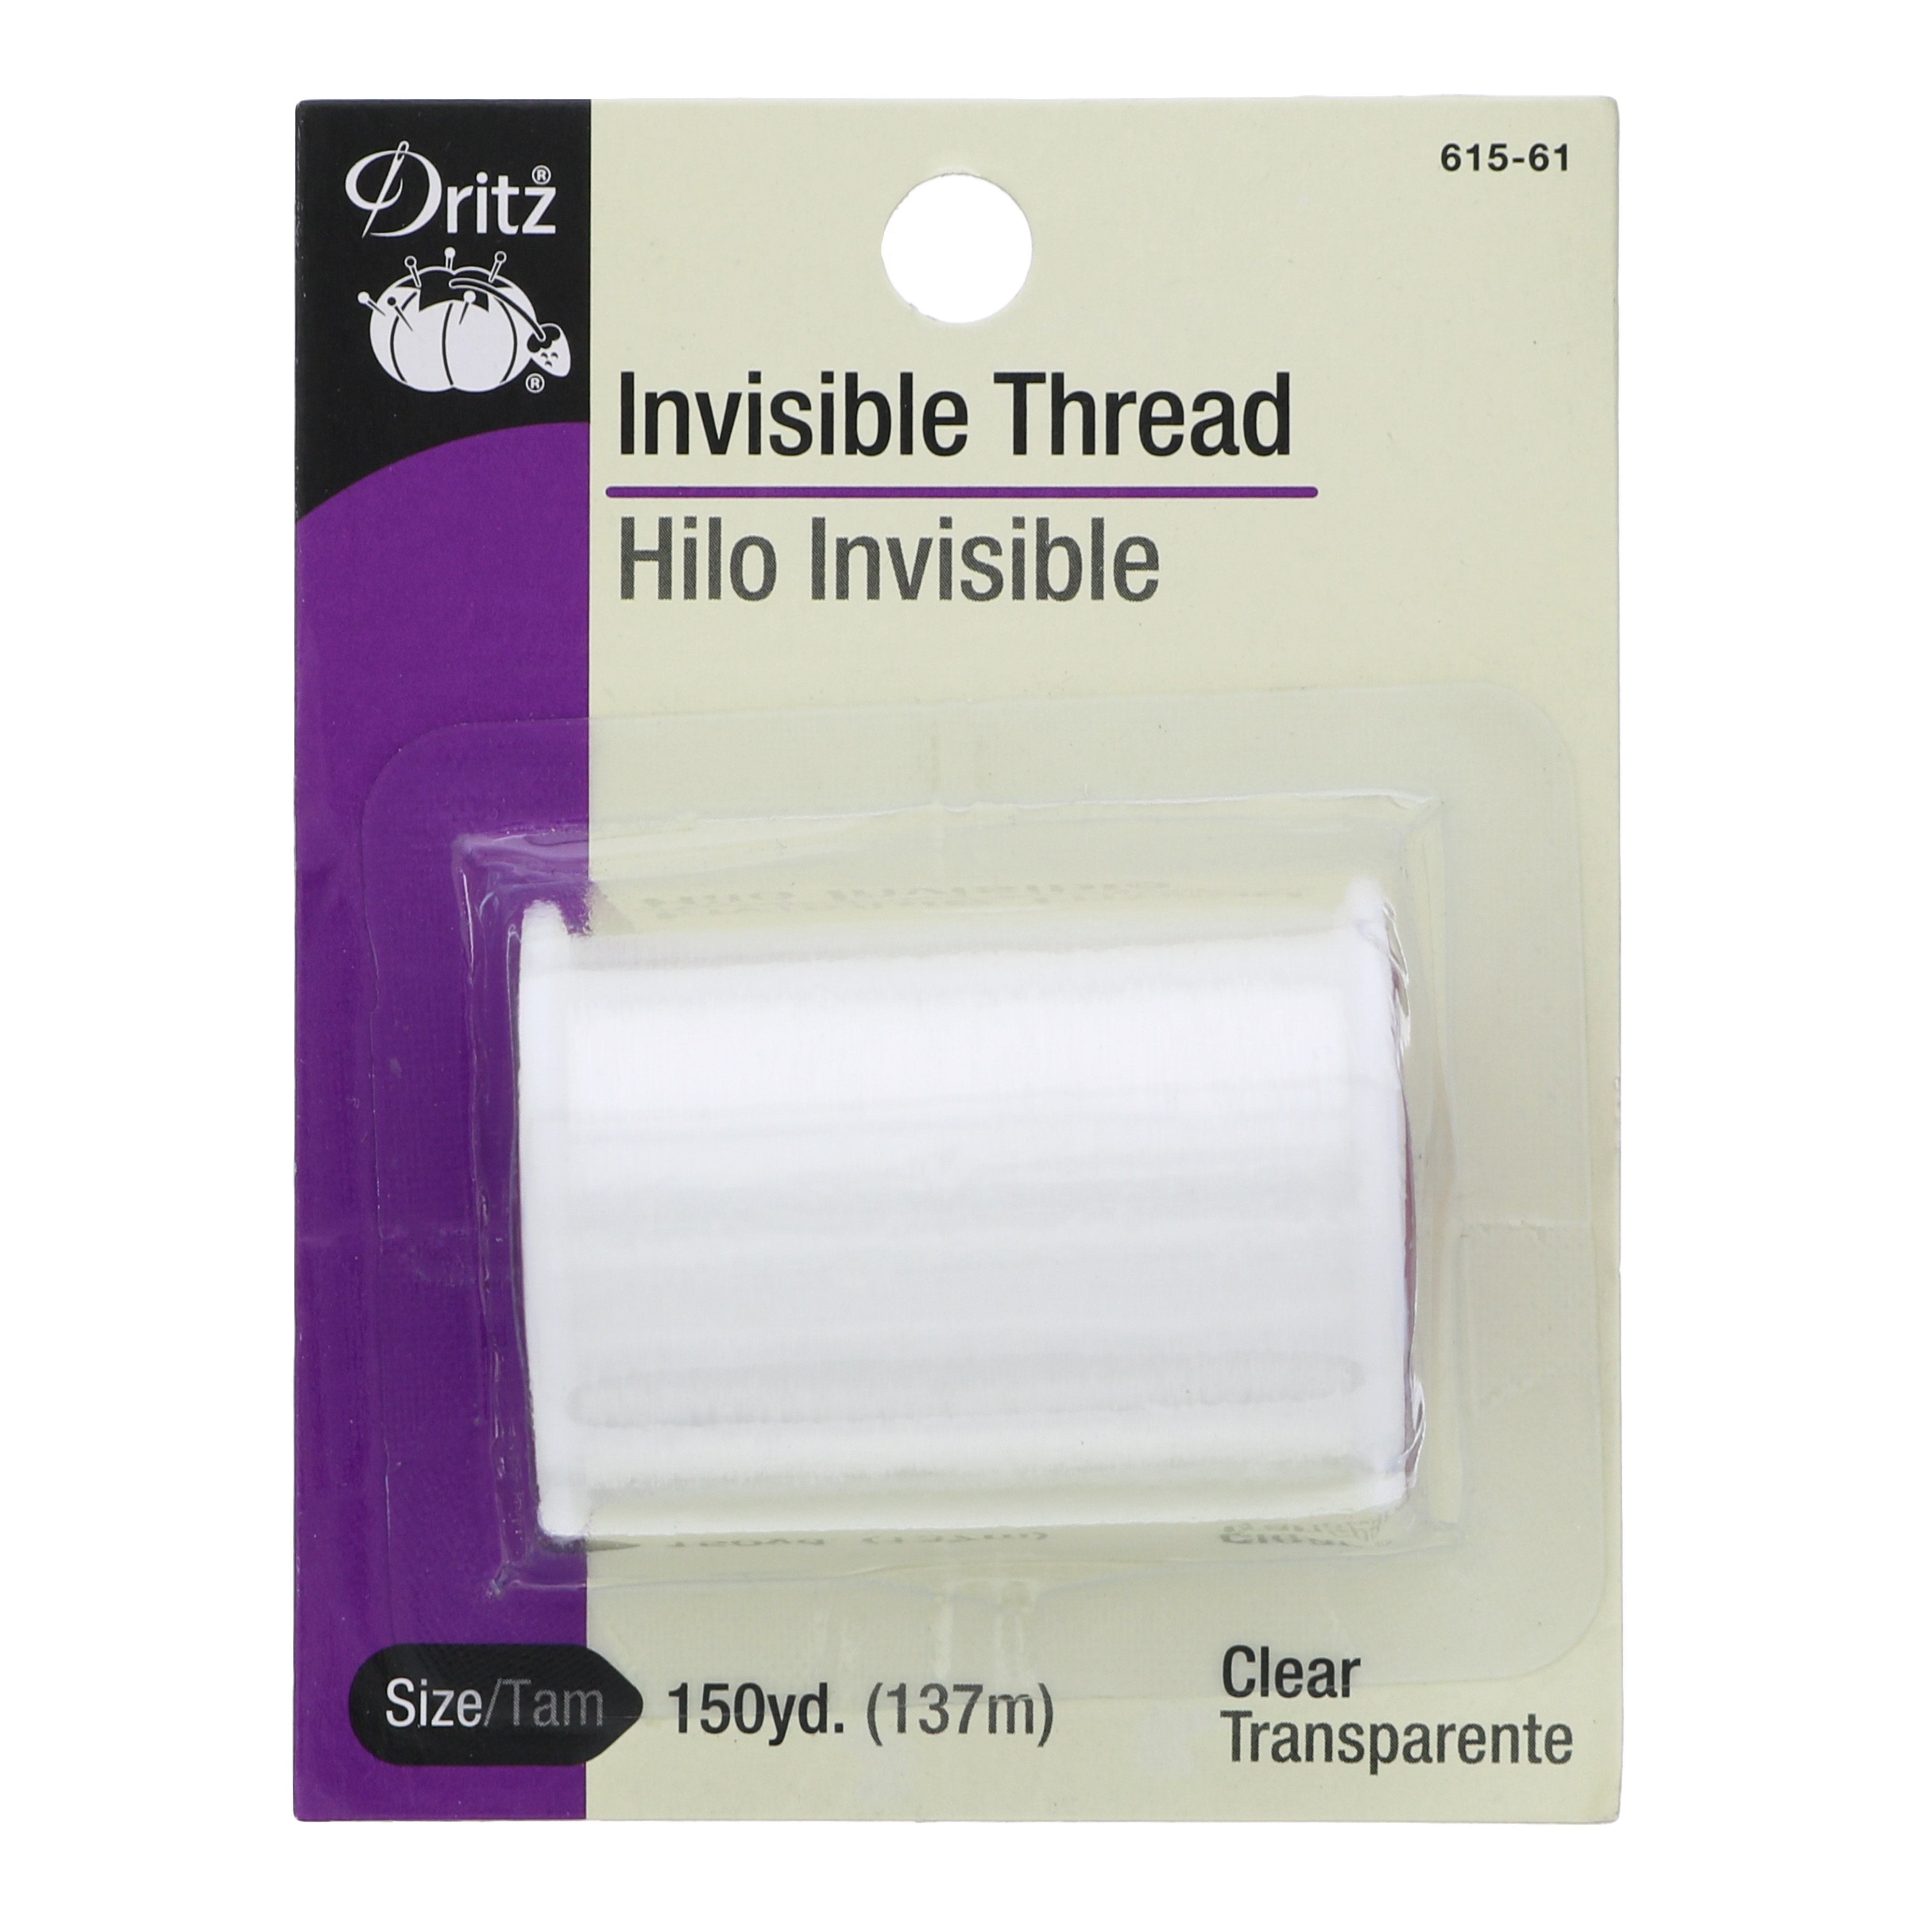 Dritz Invisible Thread